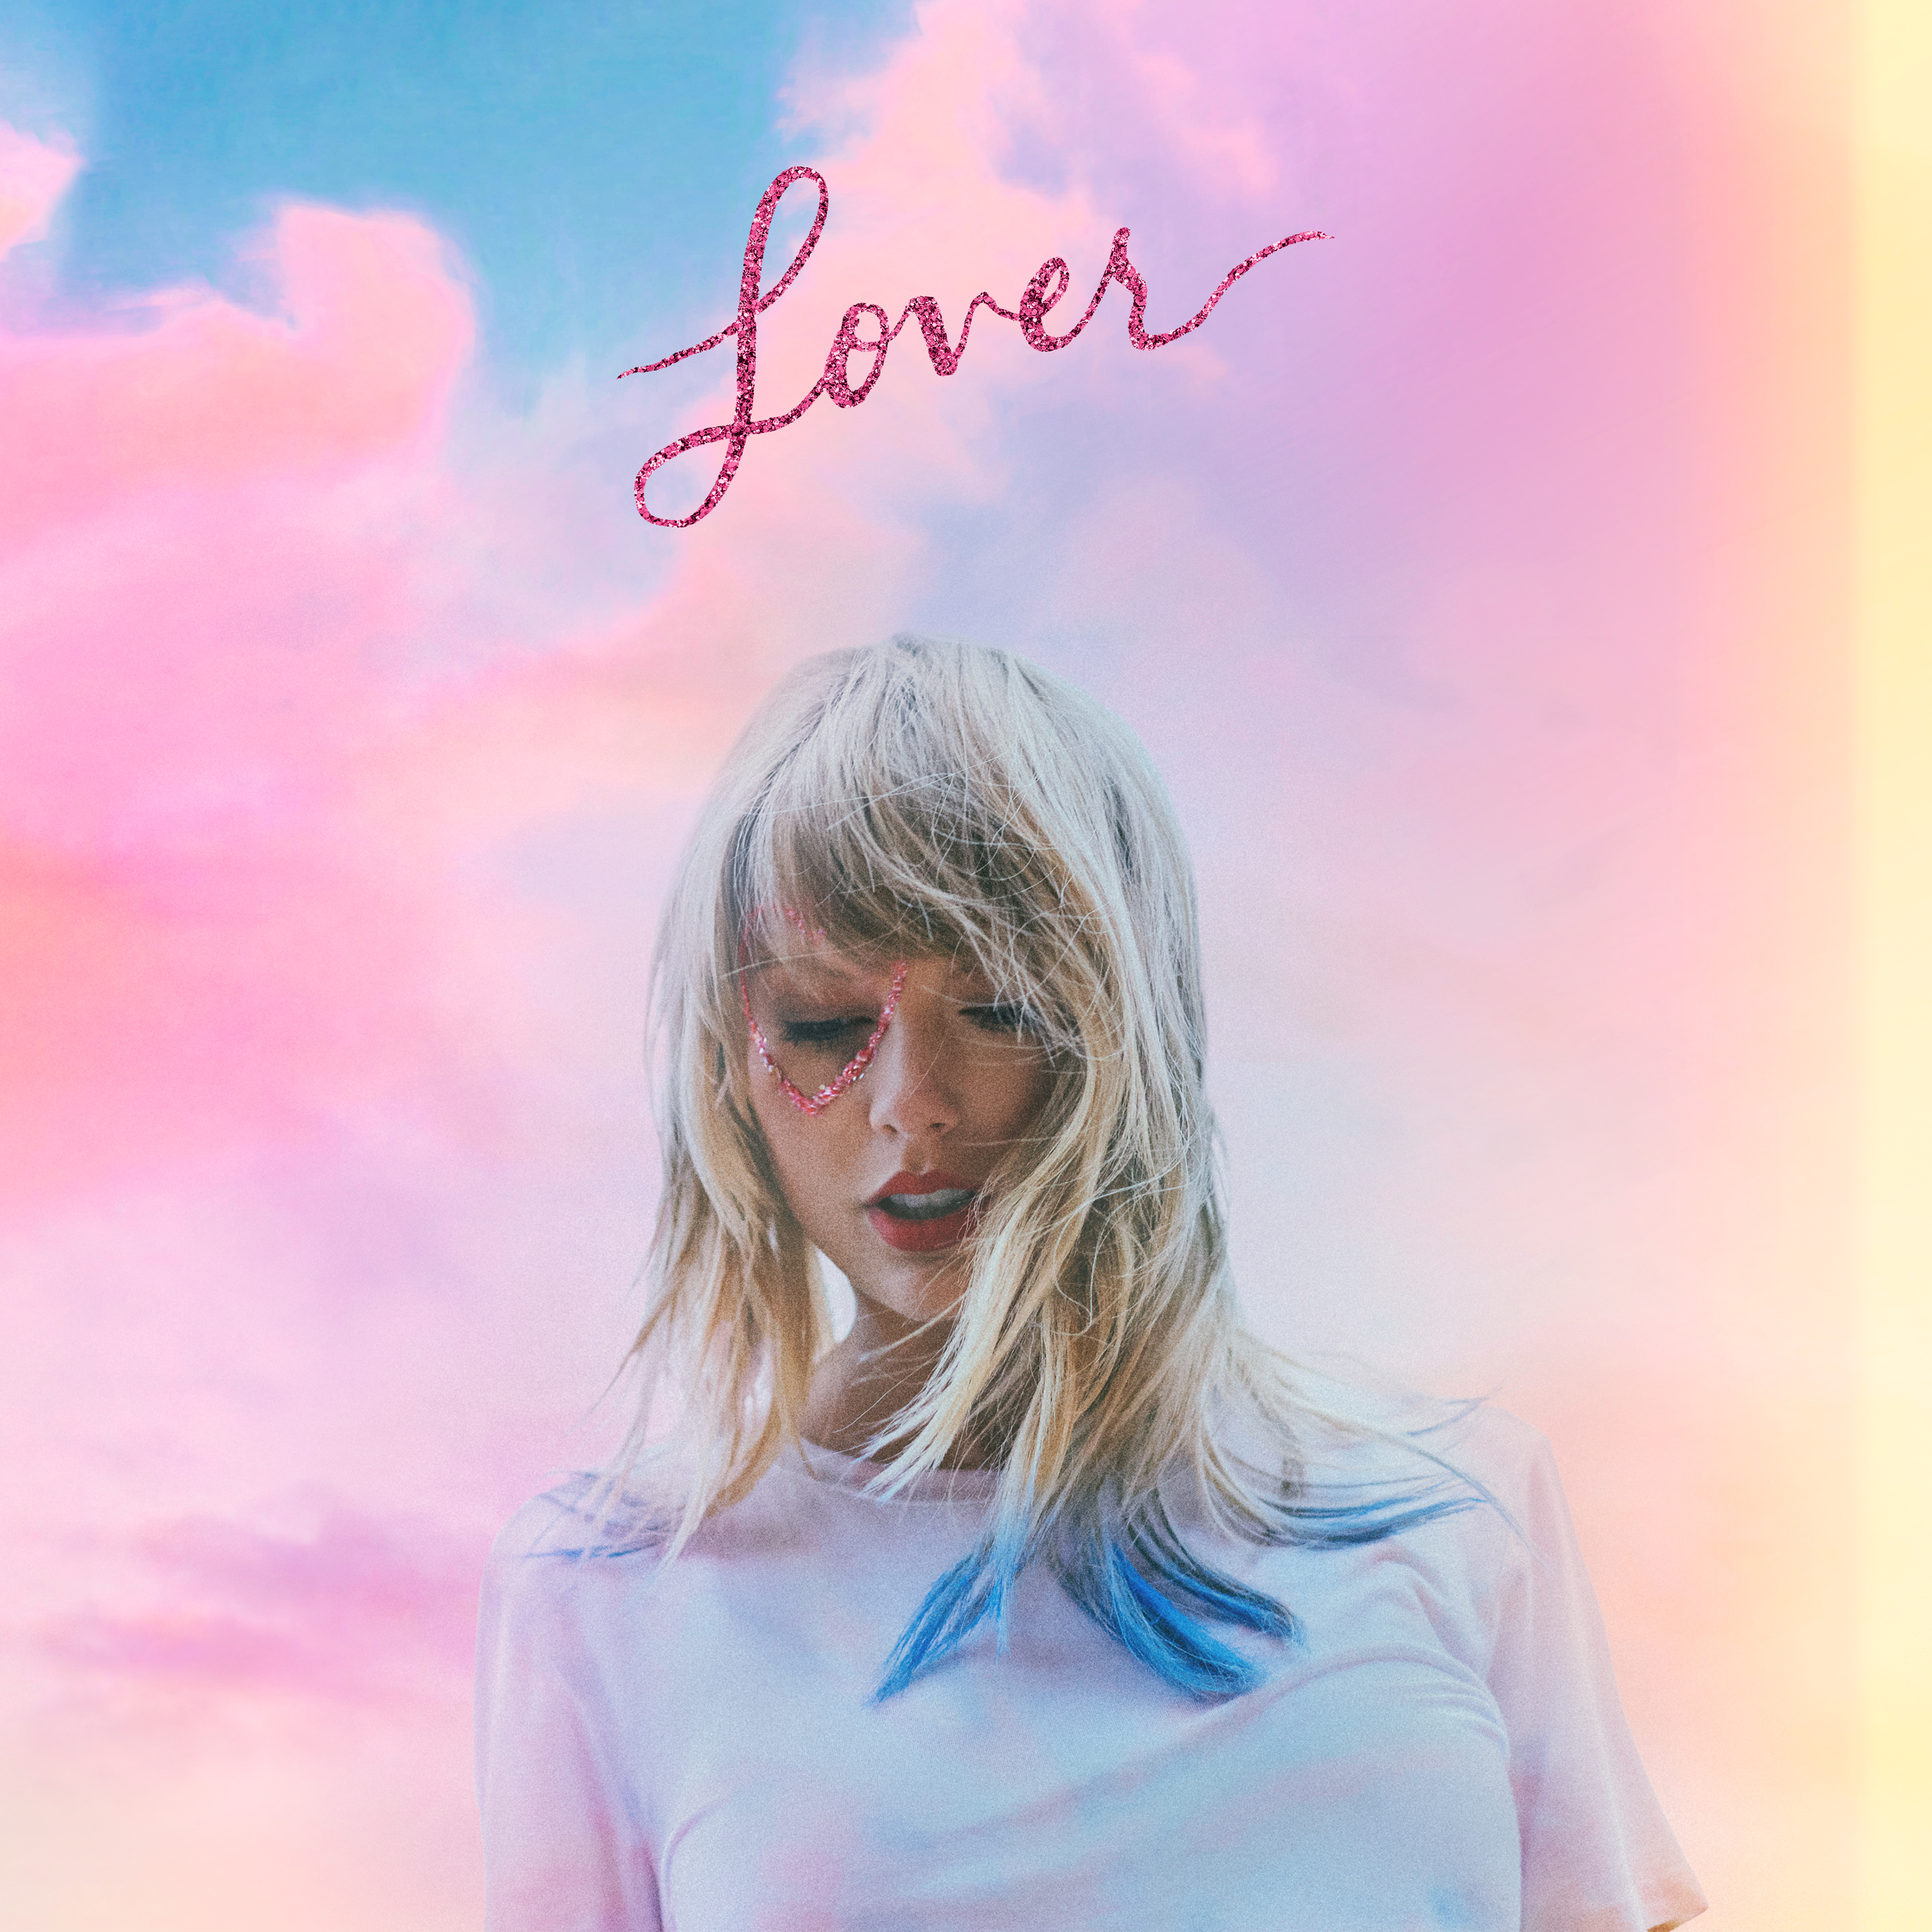 Taylor Swift Lover Full Album Mp3 Free By Stefan503 On